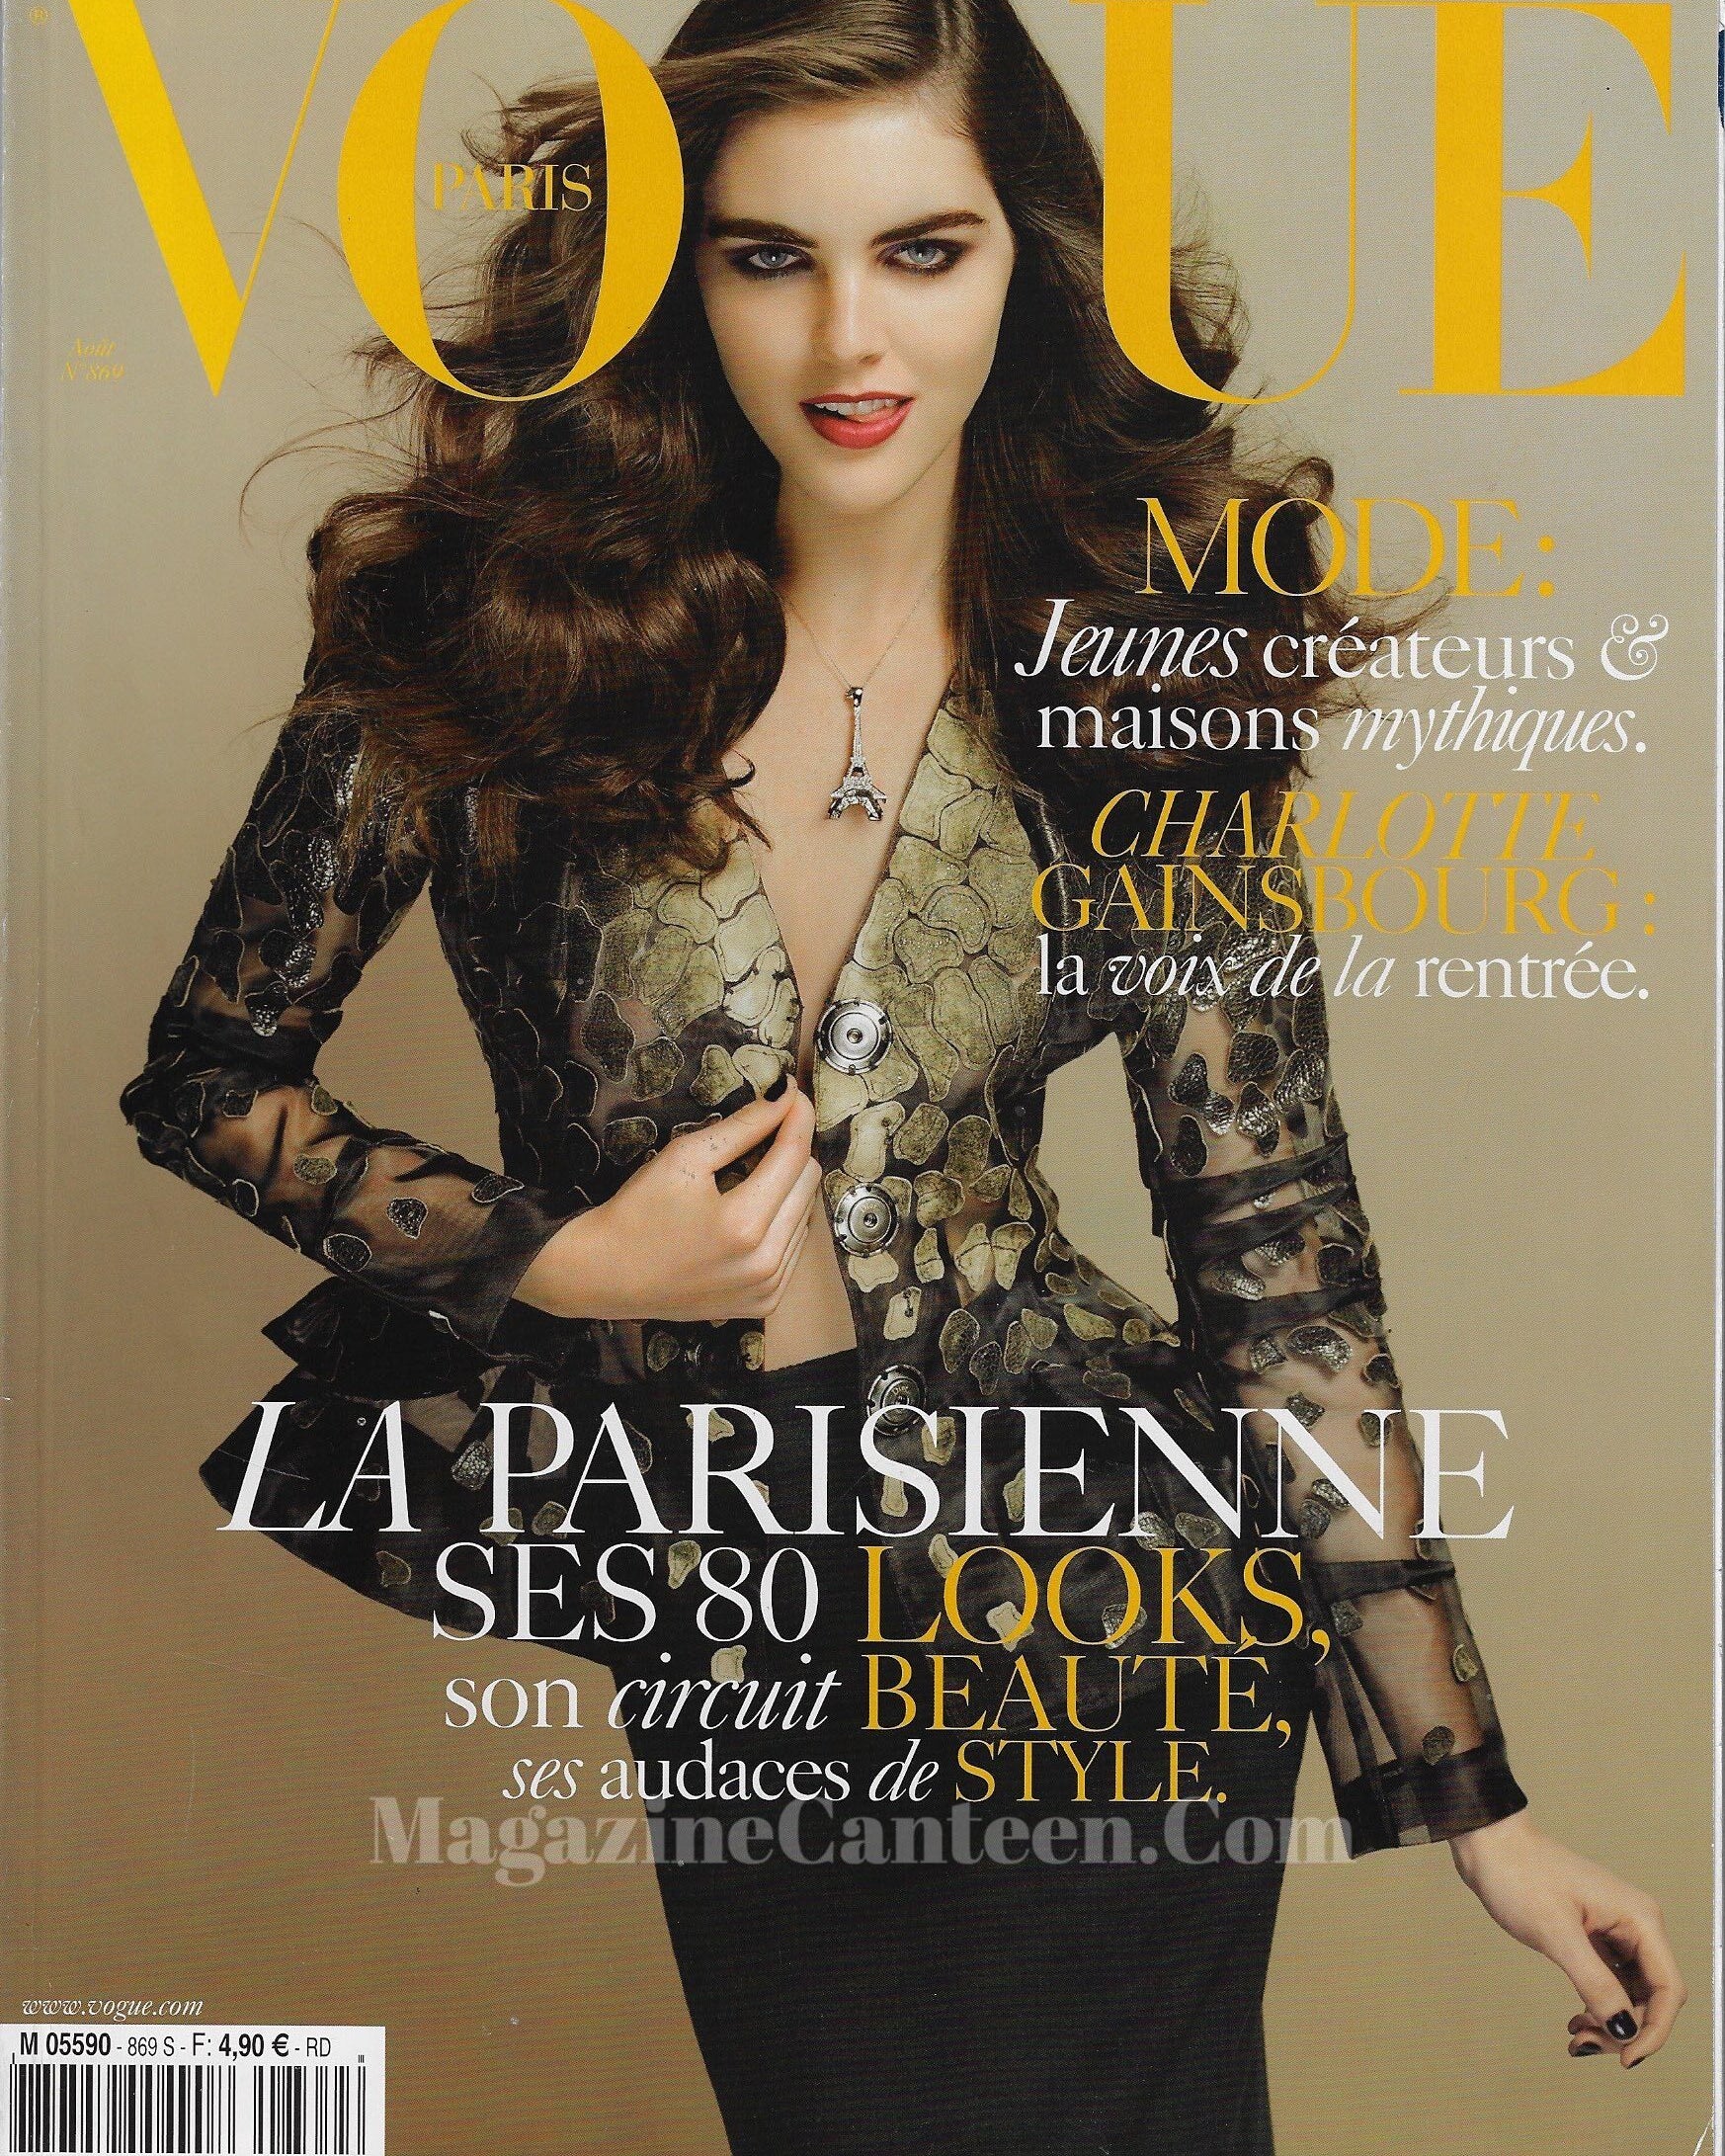 Vogue Paris Magazine 2006 - Hilary Rhoda